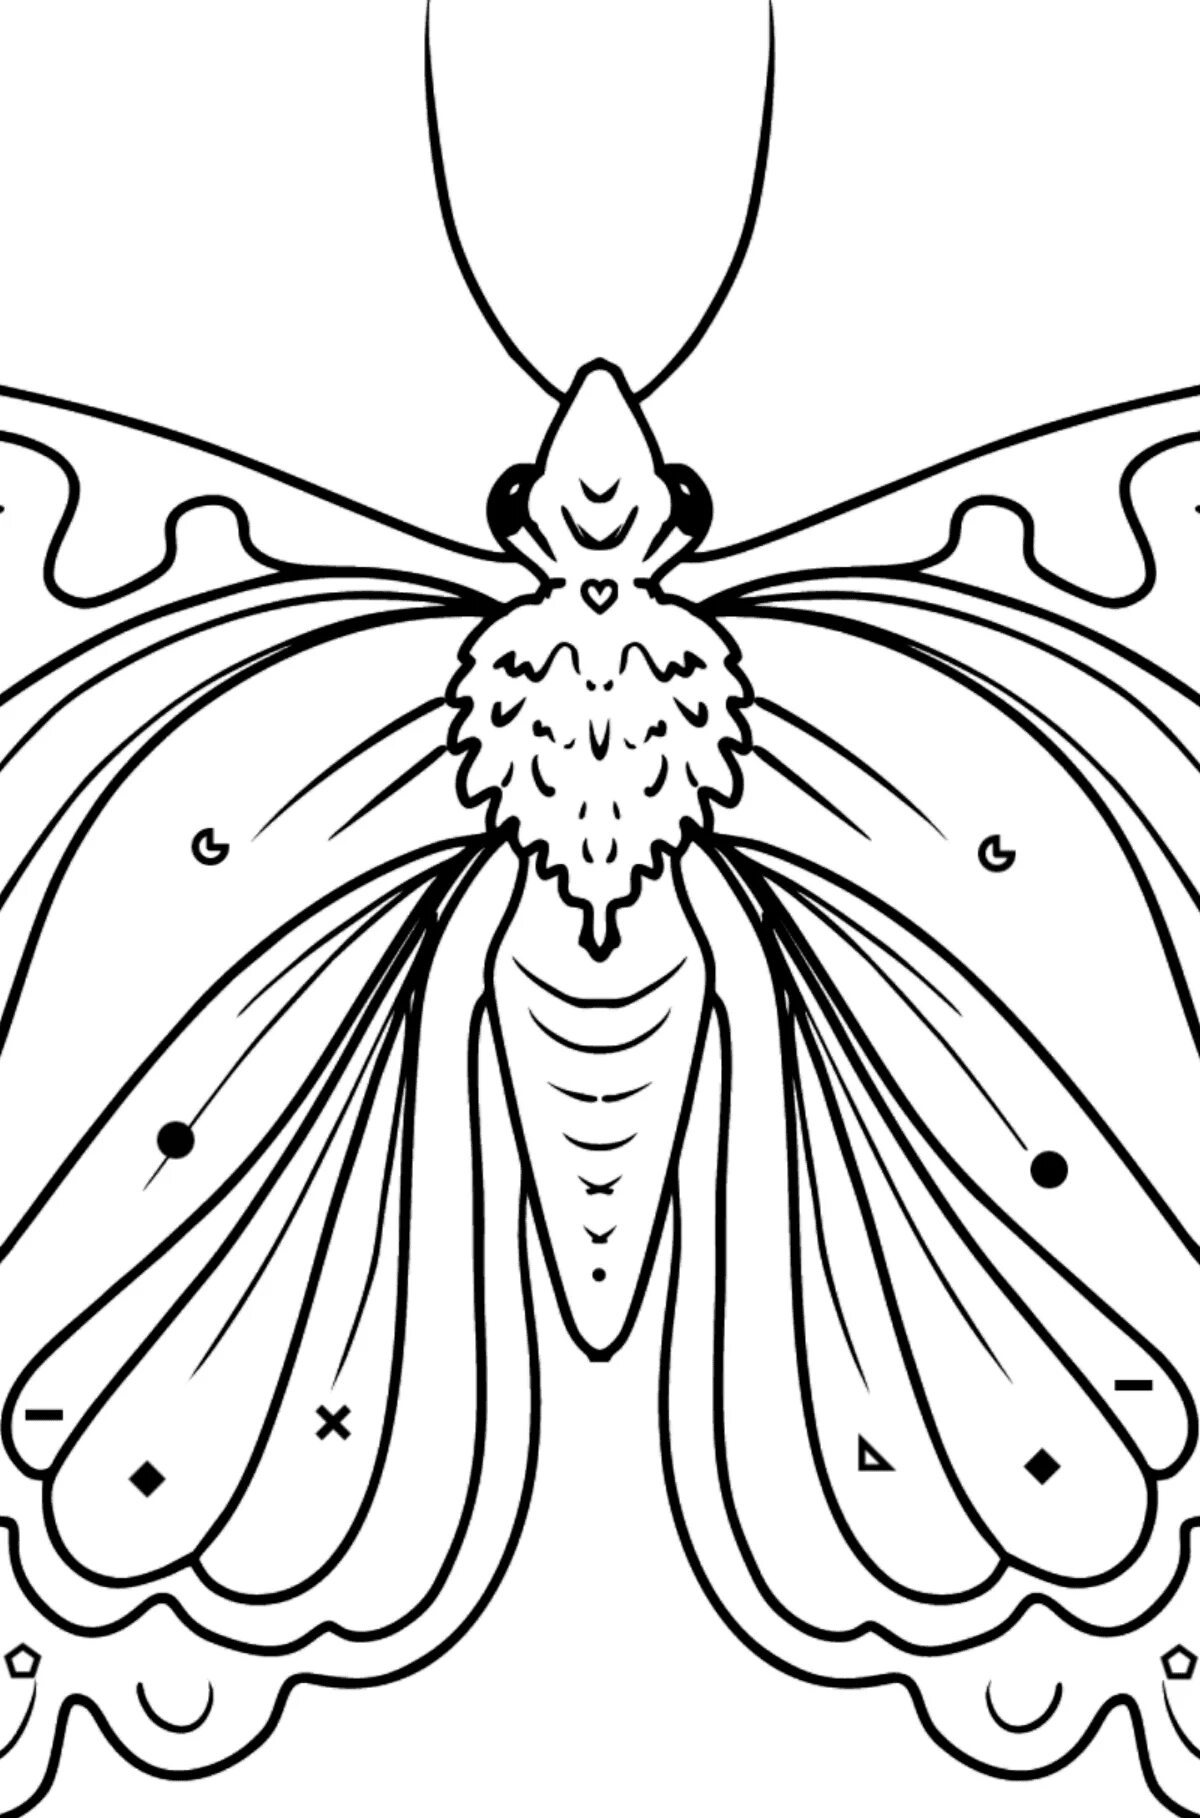 Apollo butterfly #10